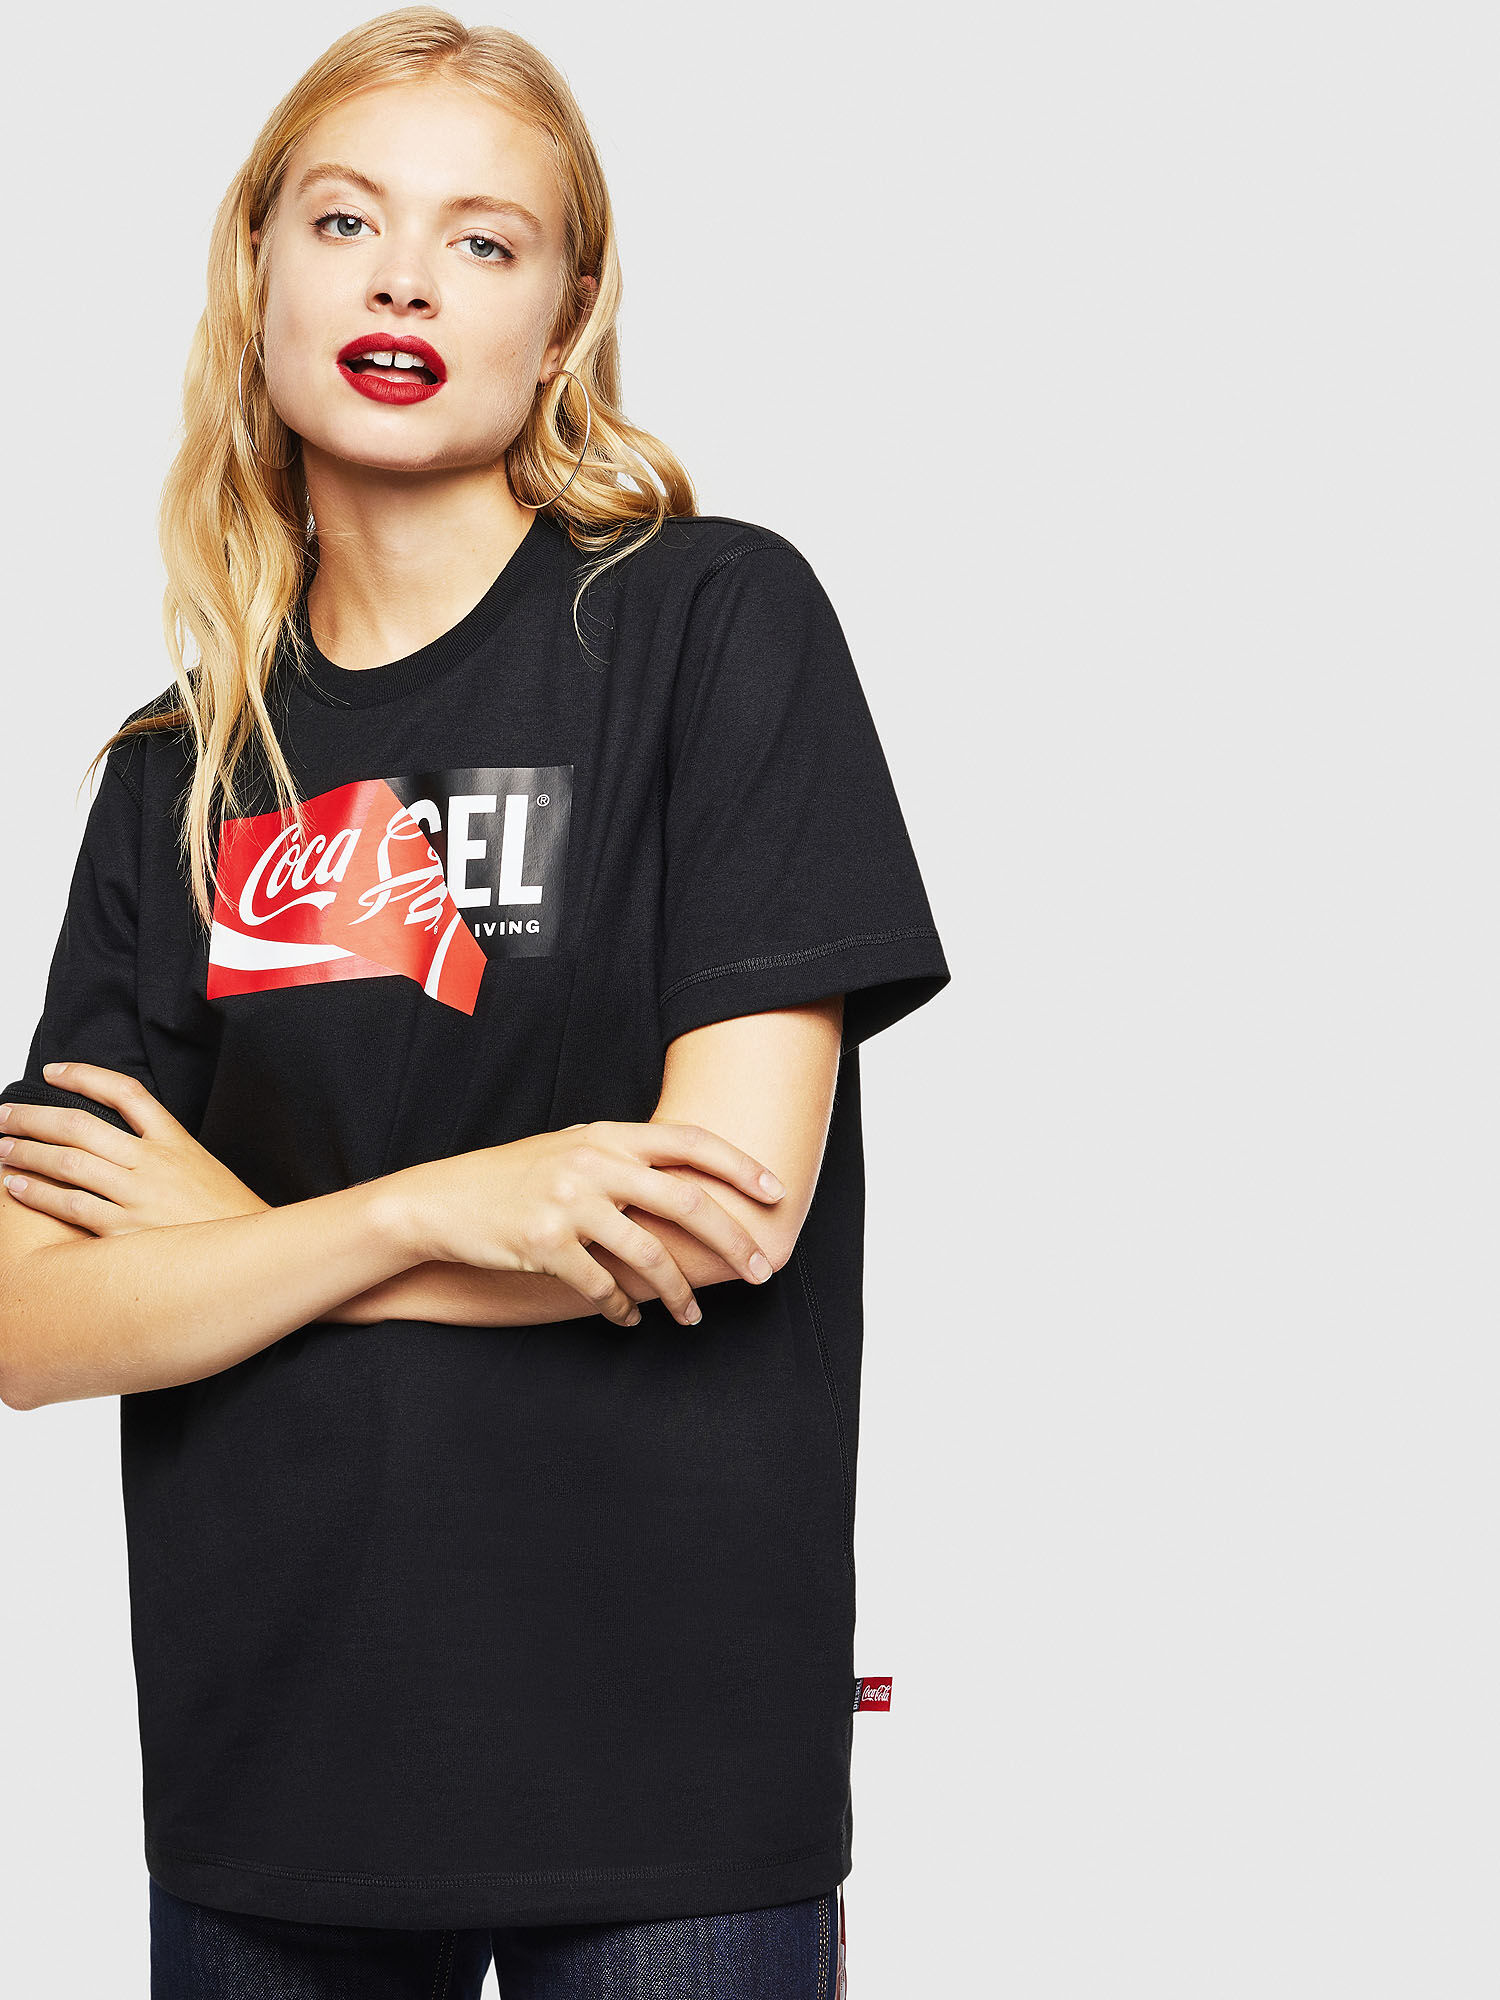 buy coca cola t shirt online india